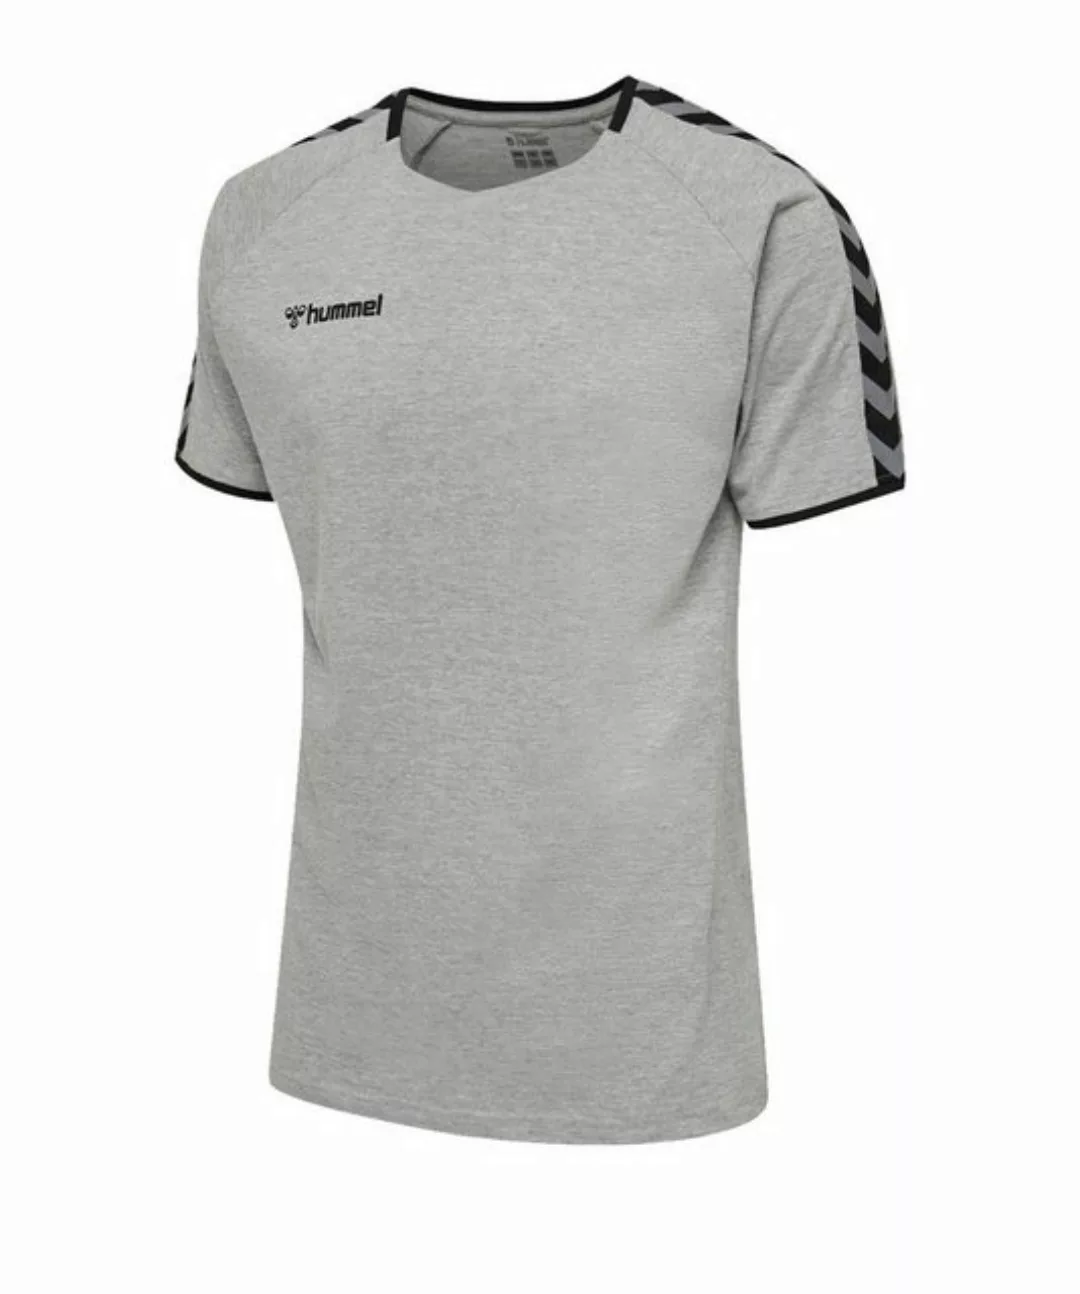 hummel T-Shirt Authentic Trainingsshirt default günstig online kaufen